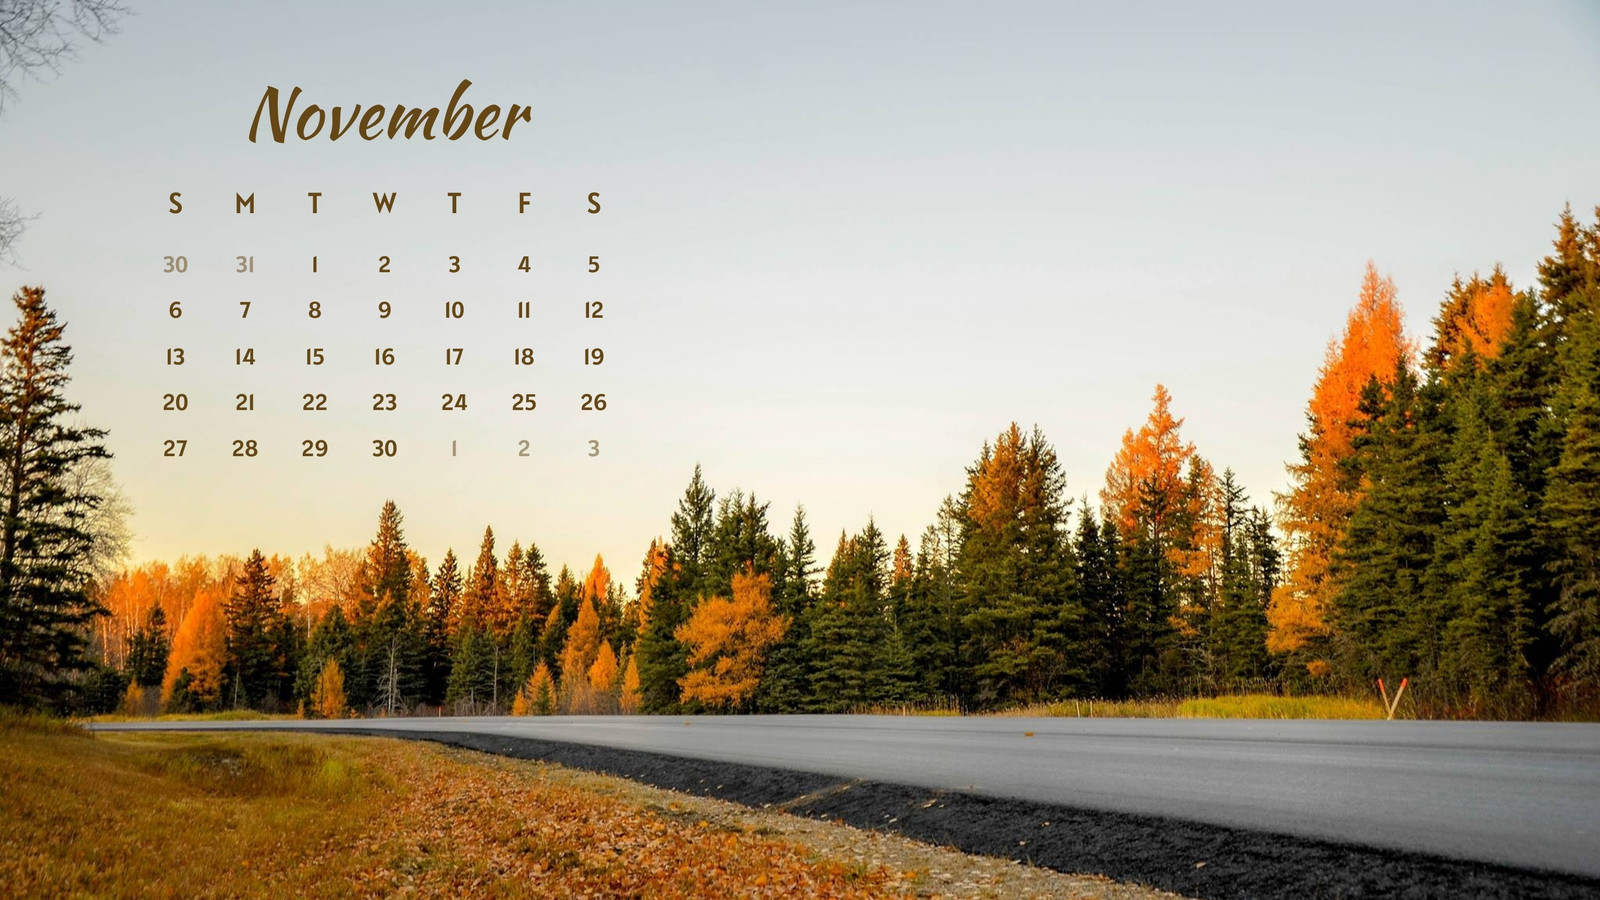 Free customizable autumn desktop wallpaper templates | Canva